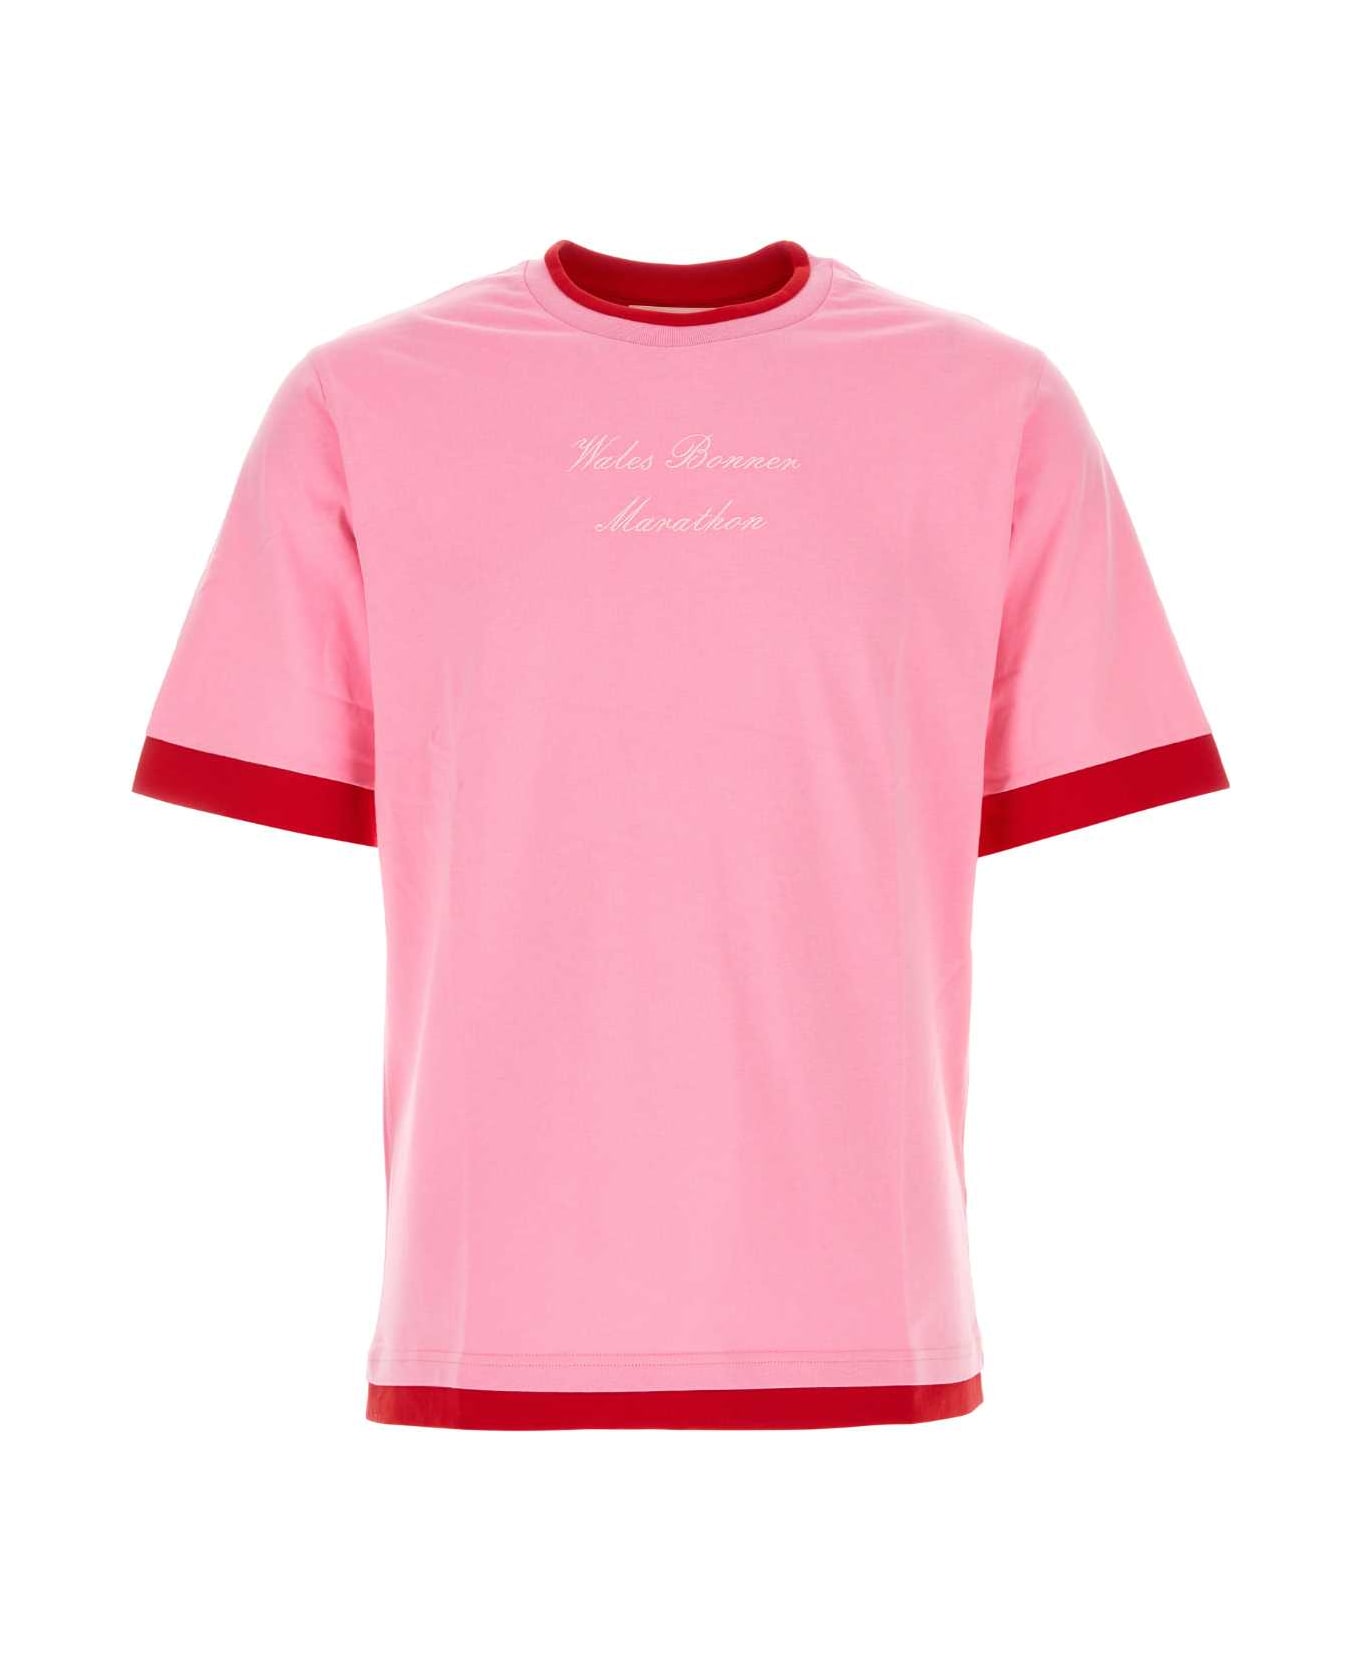 Wales Bonner Pink Cotton Marathon T-shirt - PINKANDRED